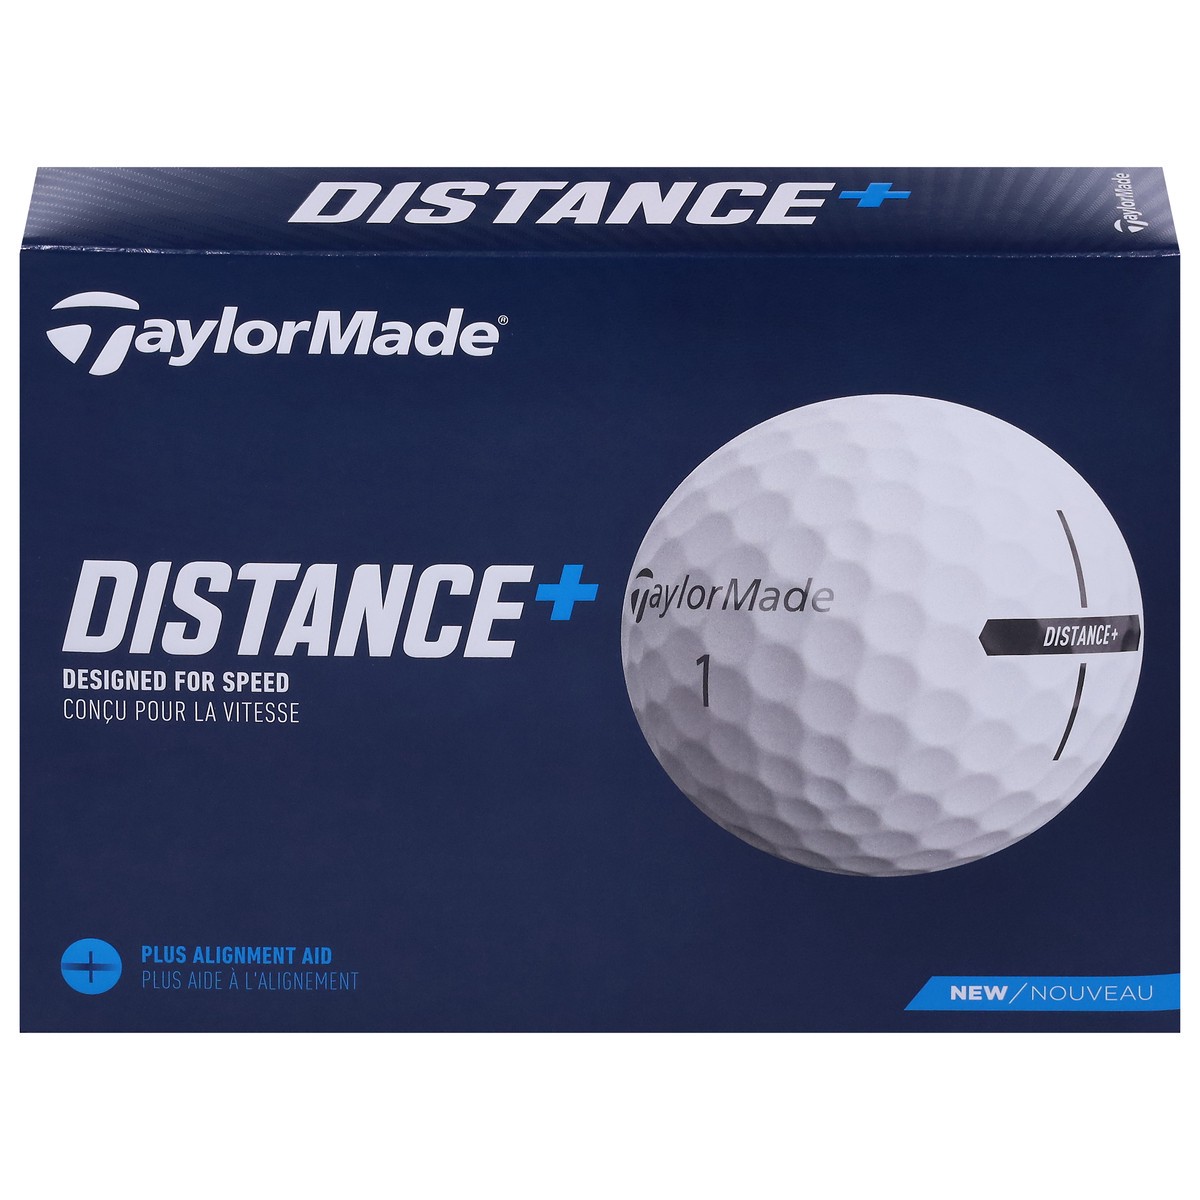 slide 1 of 9, Taylor Made Distance+ Golf balls 12 ea, 12 ct